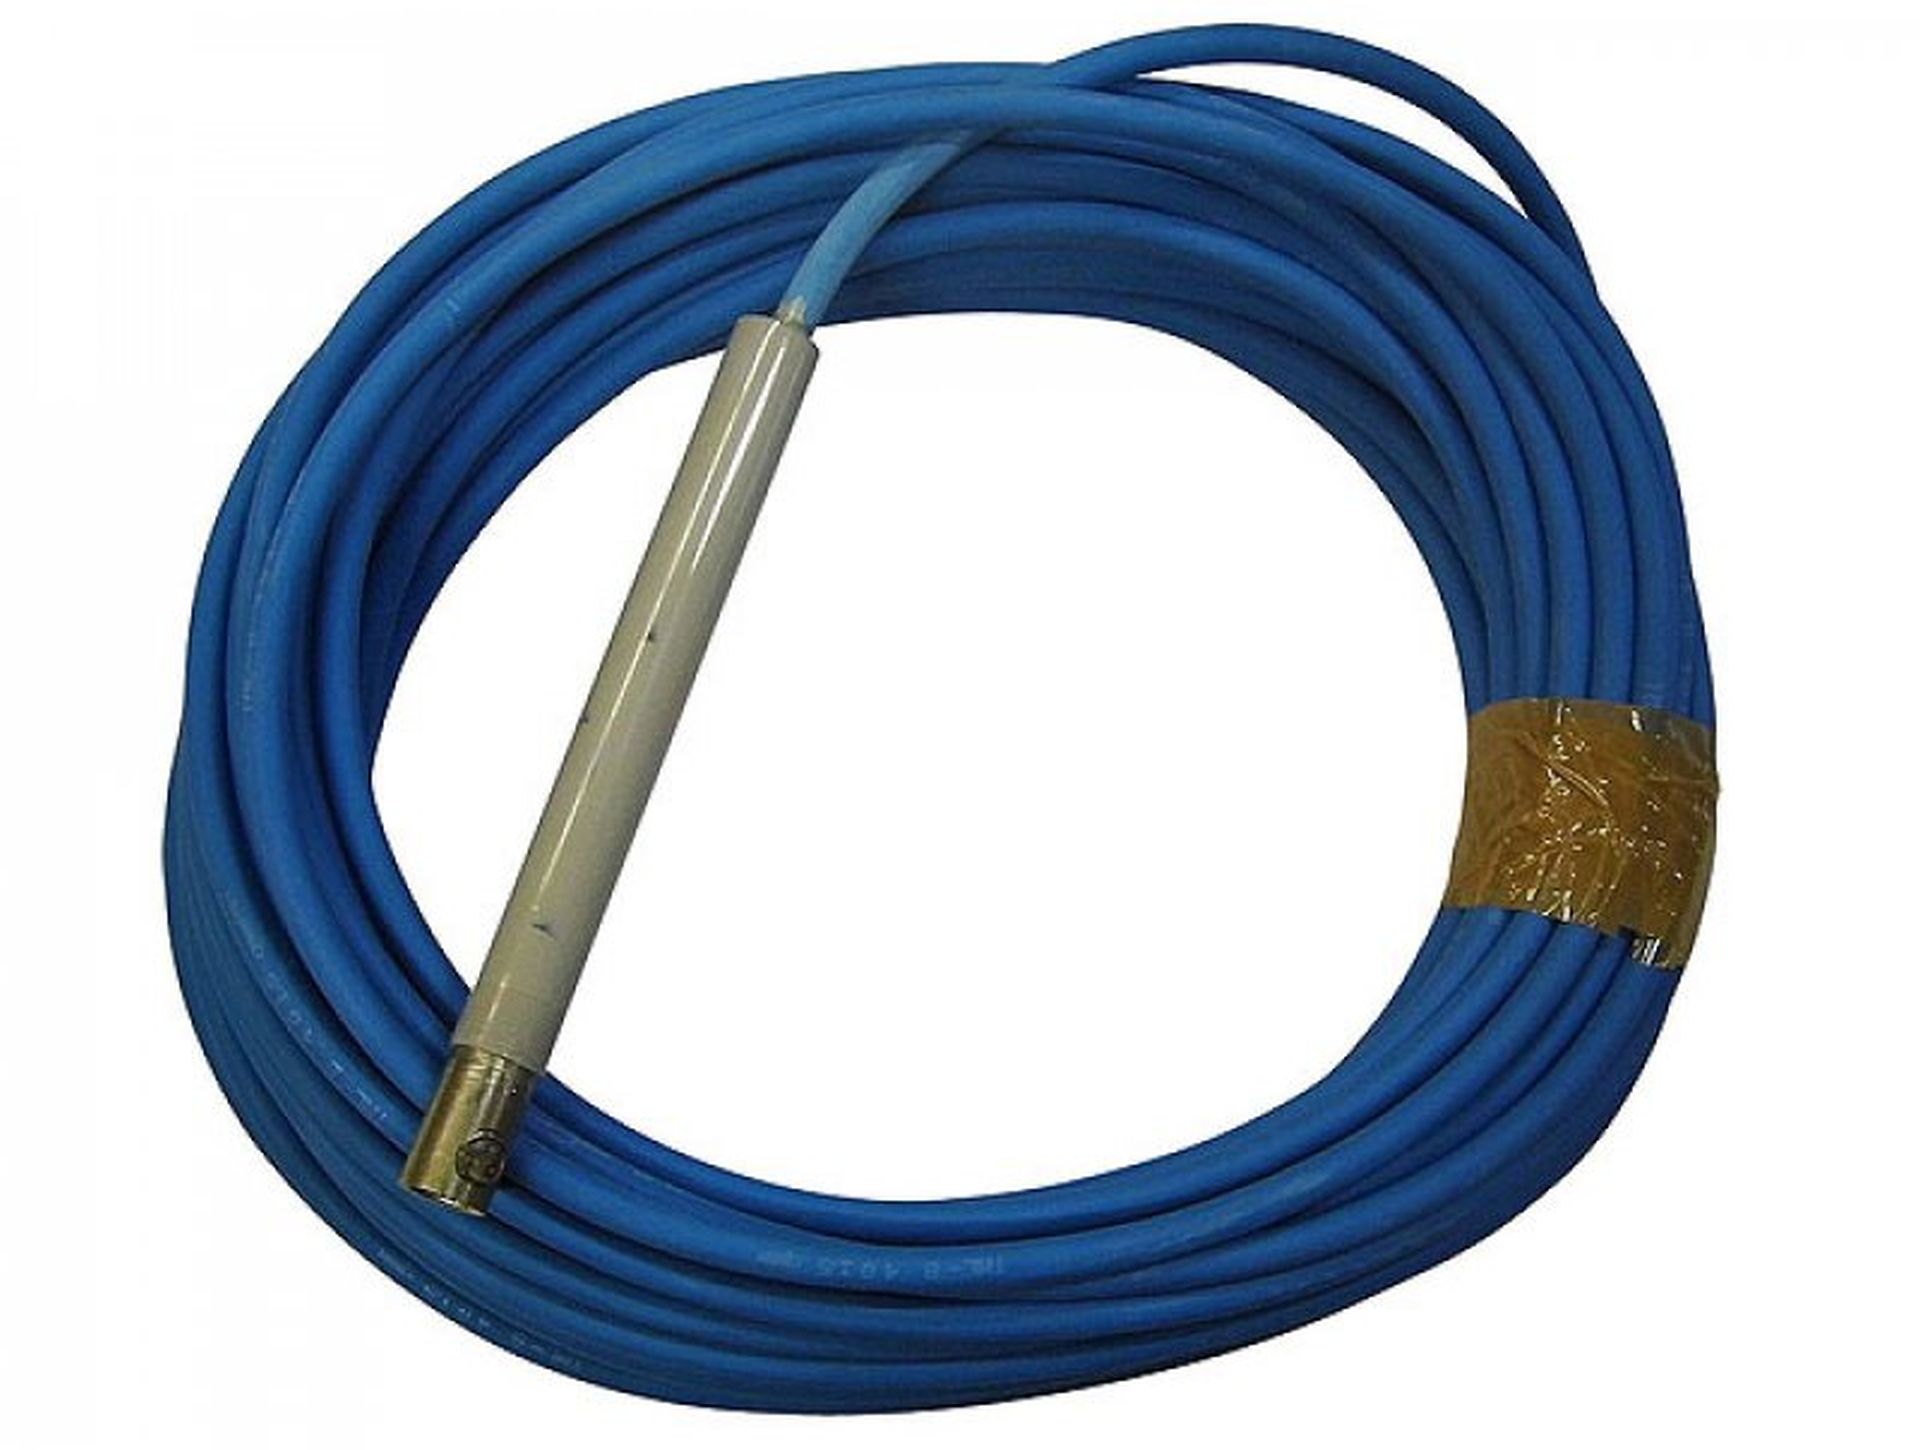 Grundfos Podvodní kabelová sada 4x1,5mm2, 30m 0079H004